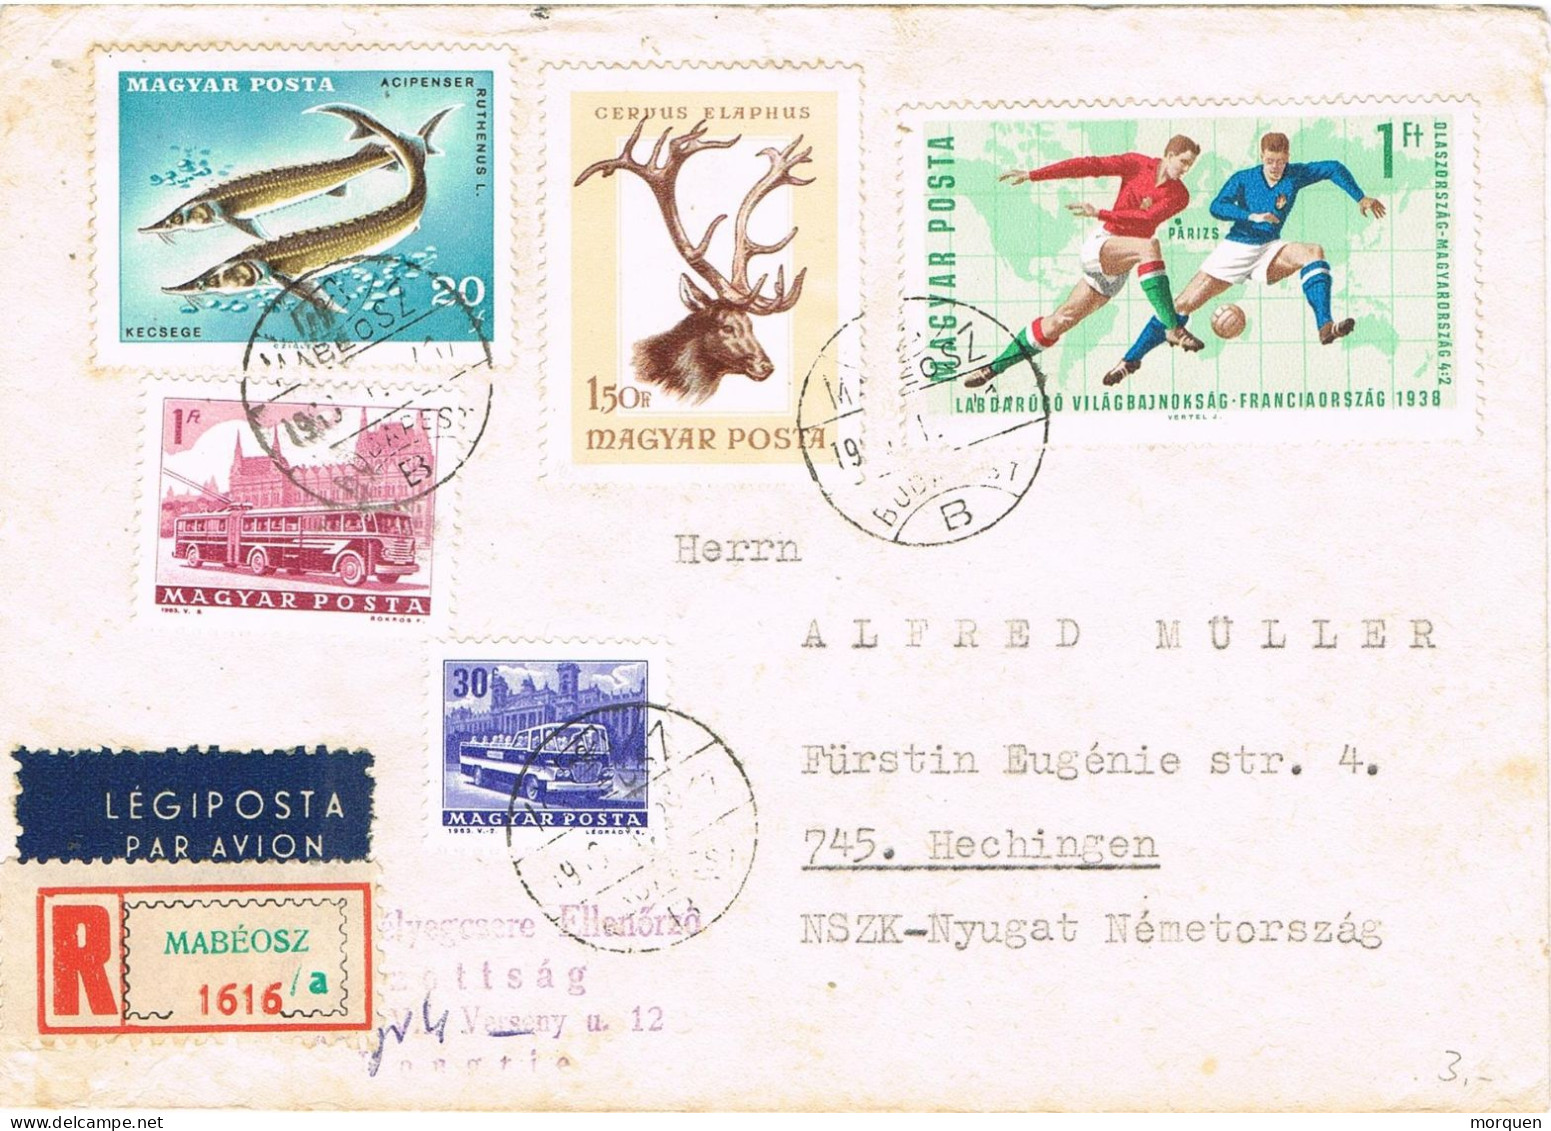 49942. Carta Aerea Certificada MABEOSZ (Hungria) 1971 To Hechingen - Storia Postale